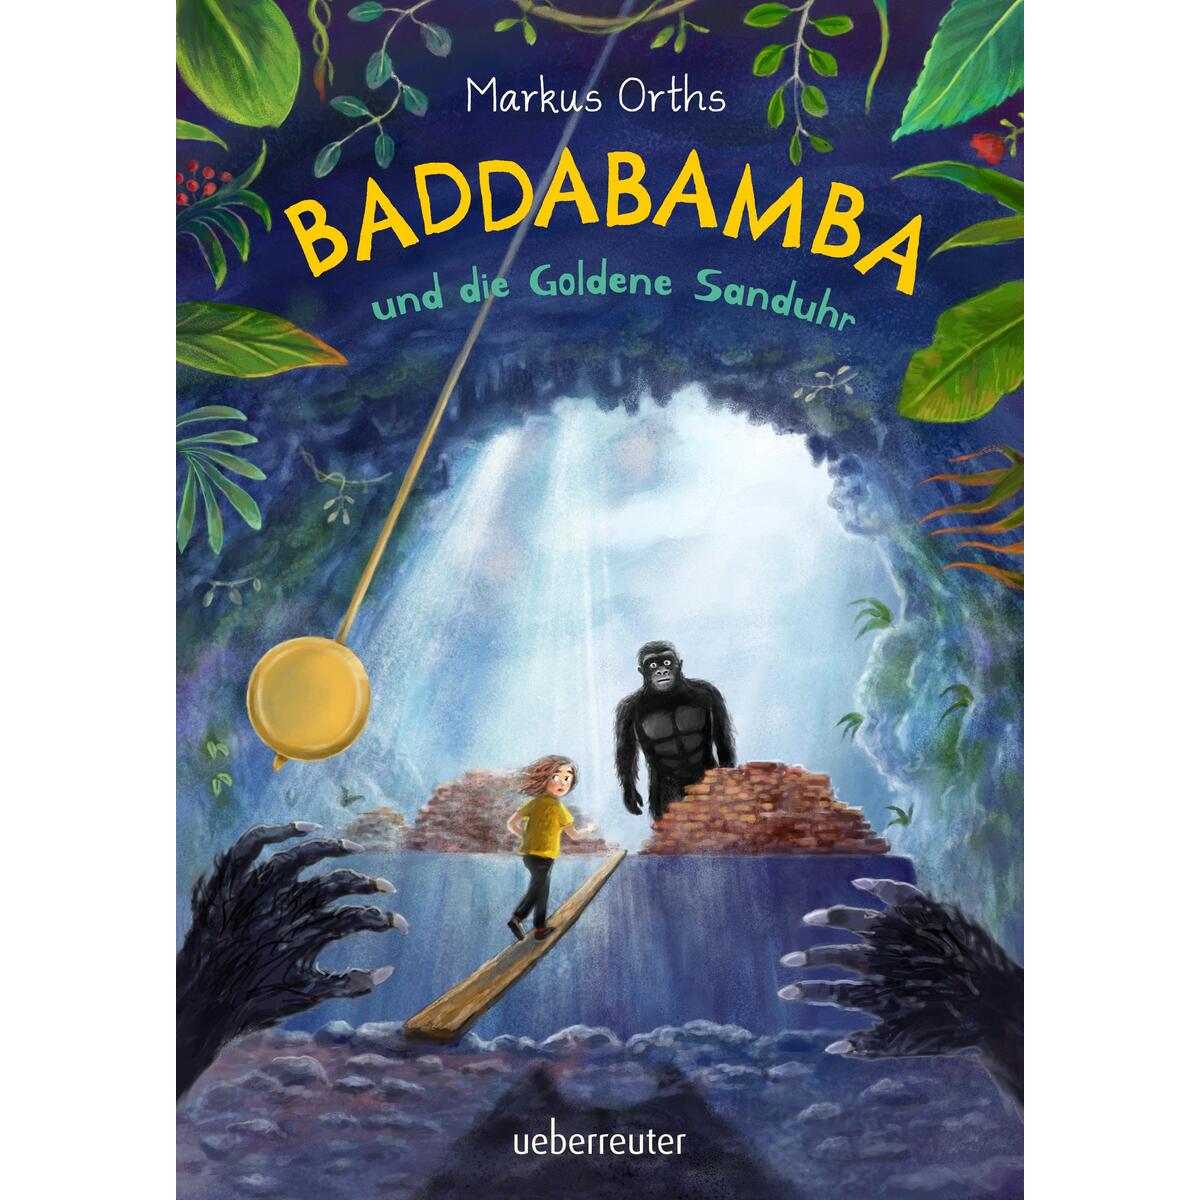 Baddabamba und die Goldene Sanduhr (Baddabamba, Bd. 3) von Ueberreuter Verlag